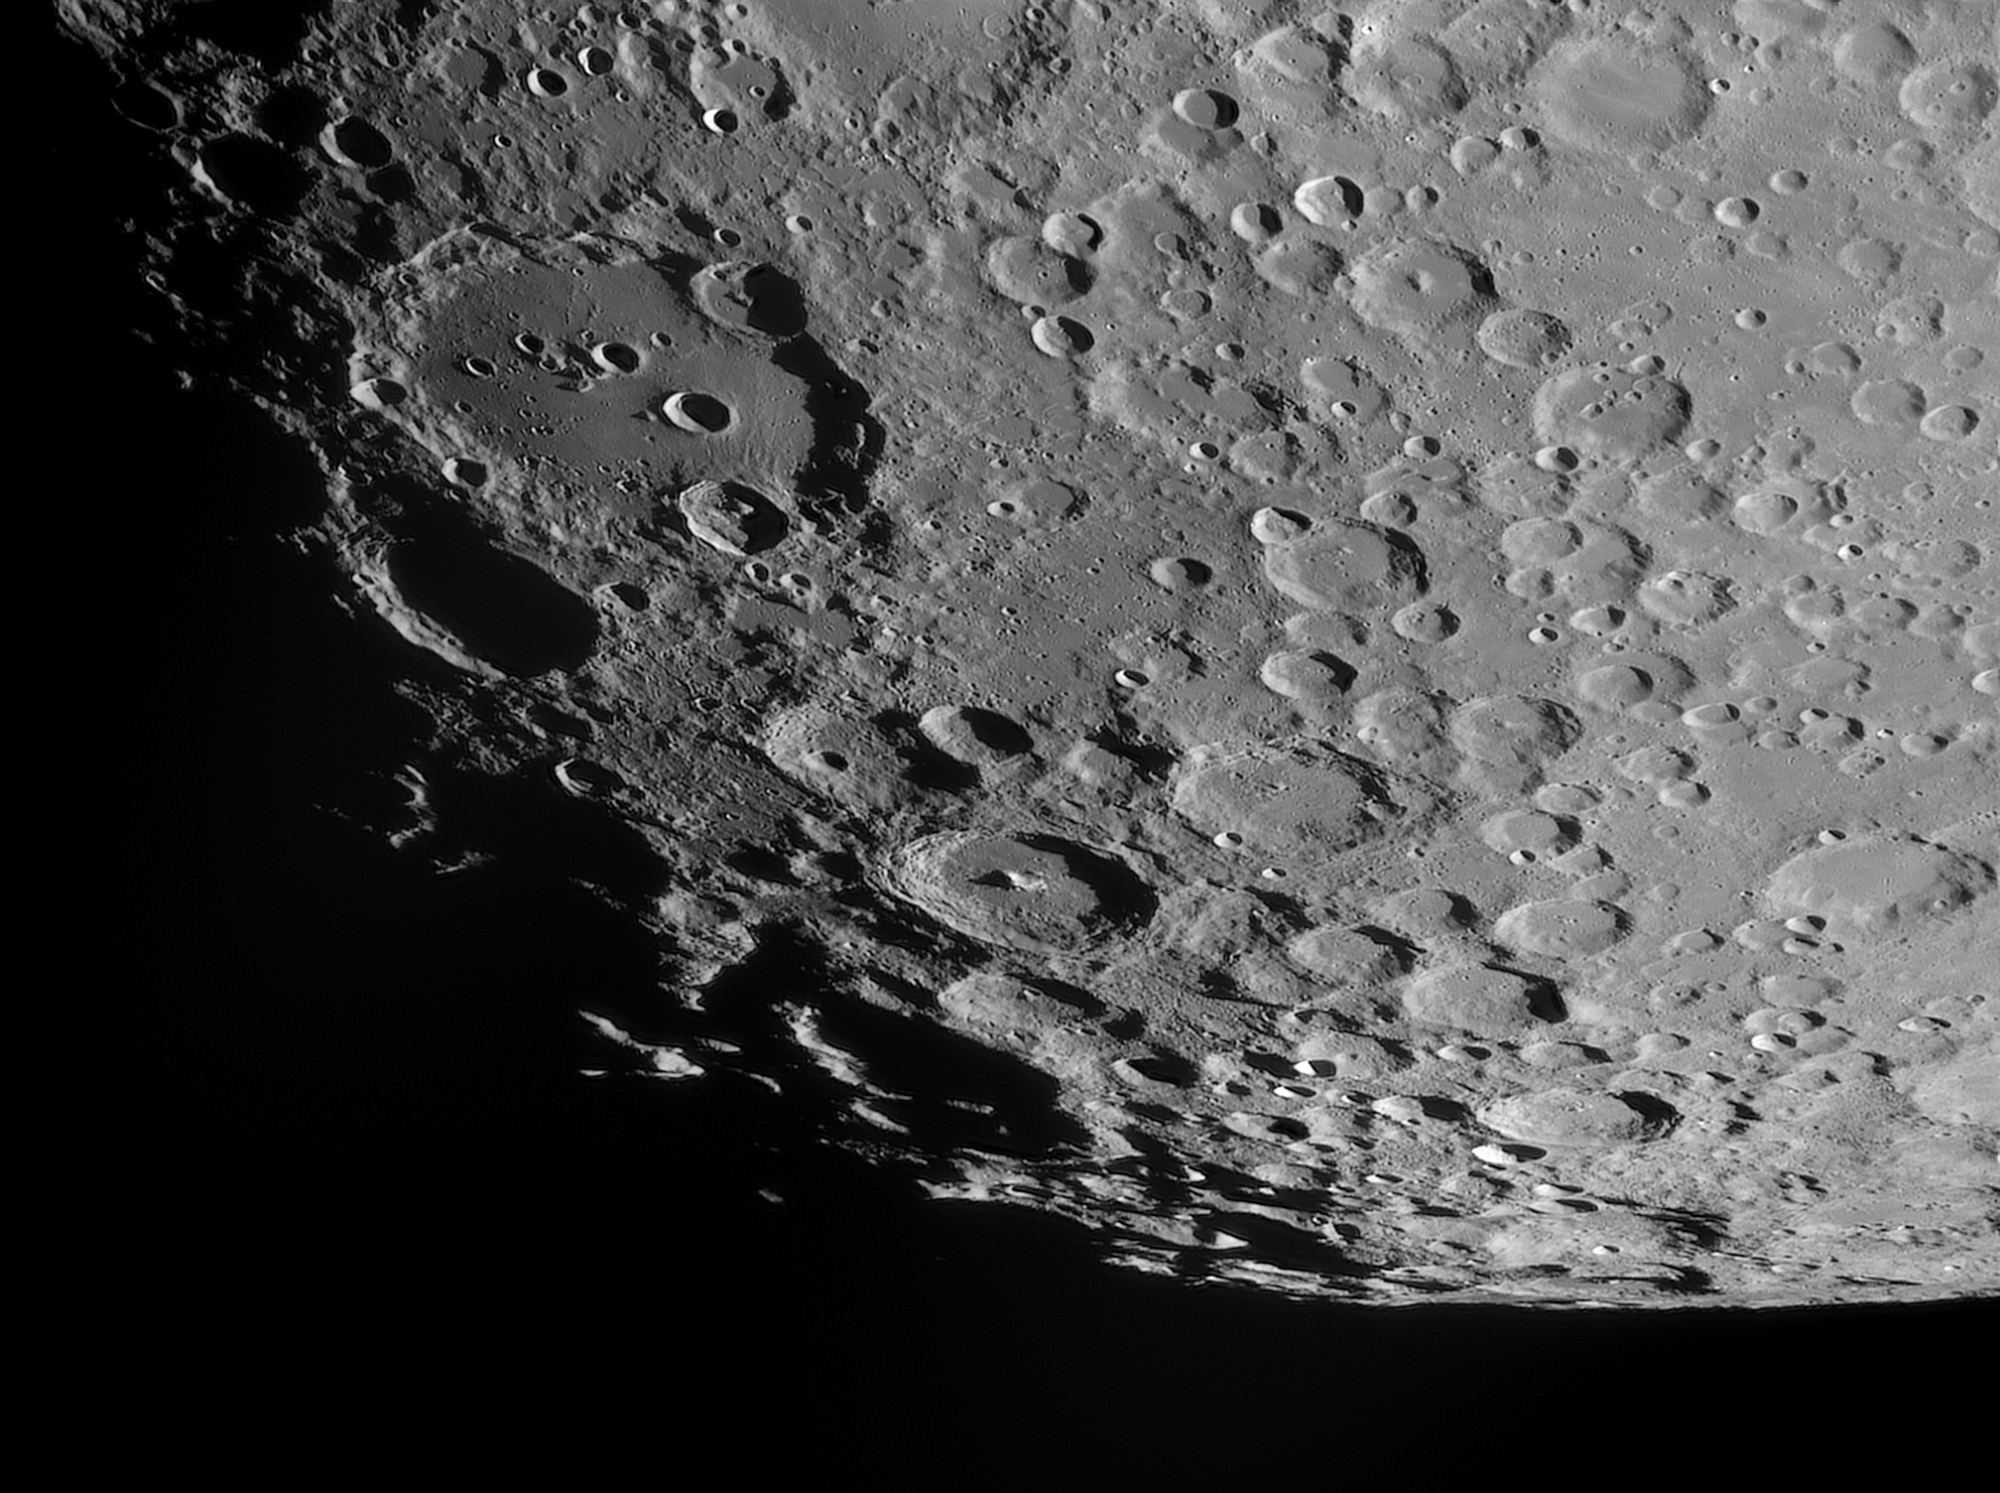 Lune-20230301_Clavius-ba-01-AS.thumb.jpg.1437ee638983719e36c982fab444d703.jpg